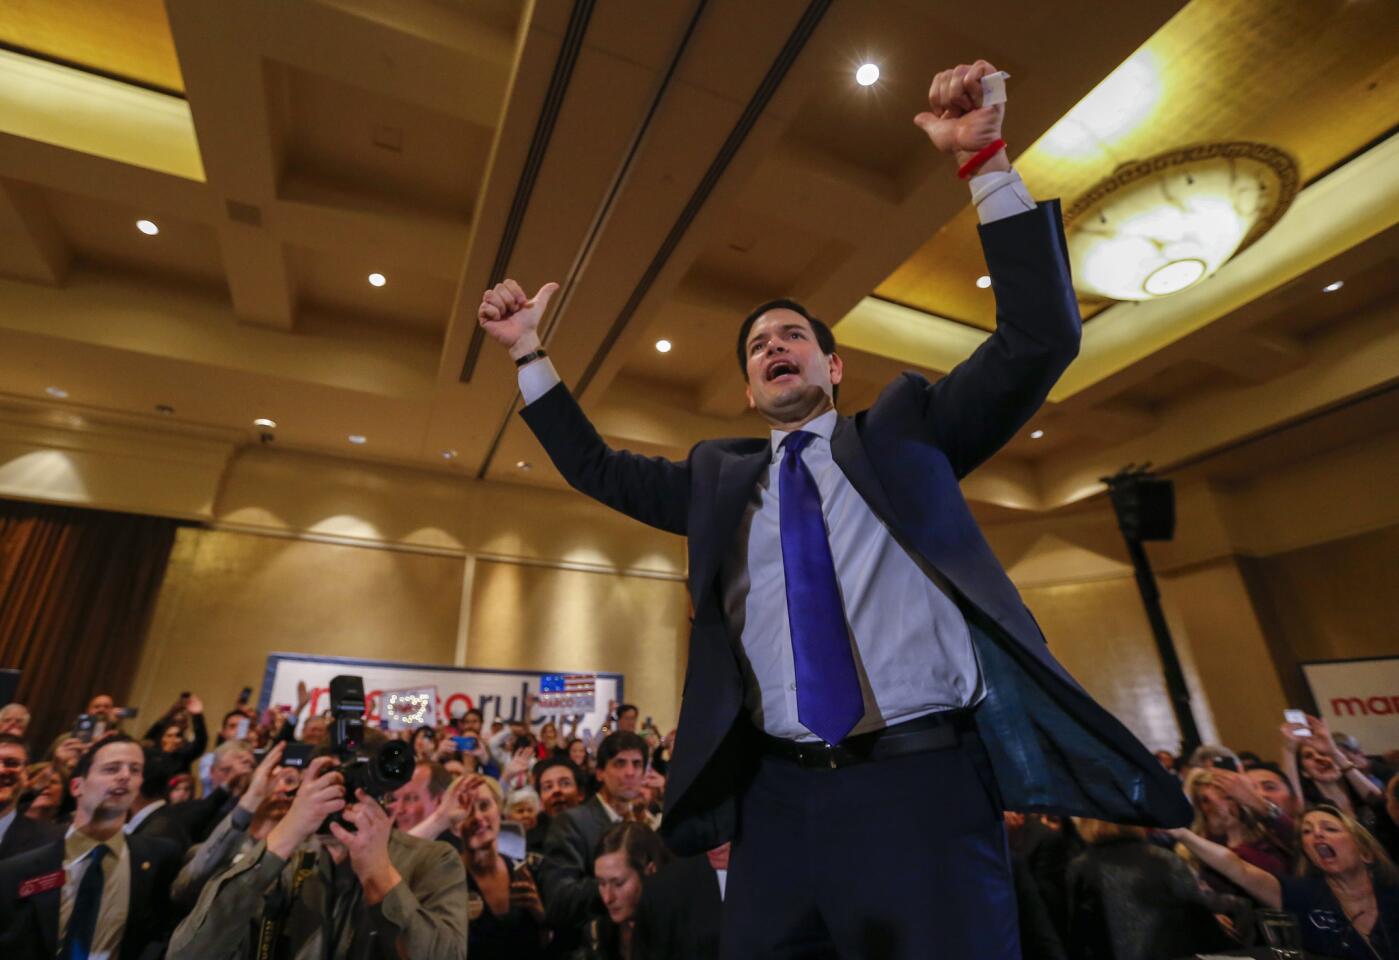 Sen. Marco Rubio campaigns ahead of Super Tuesday